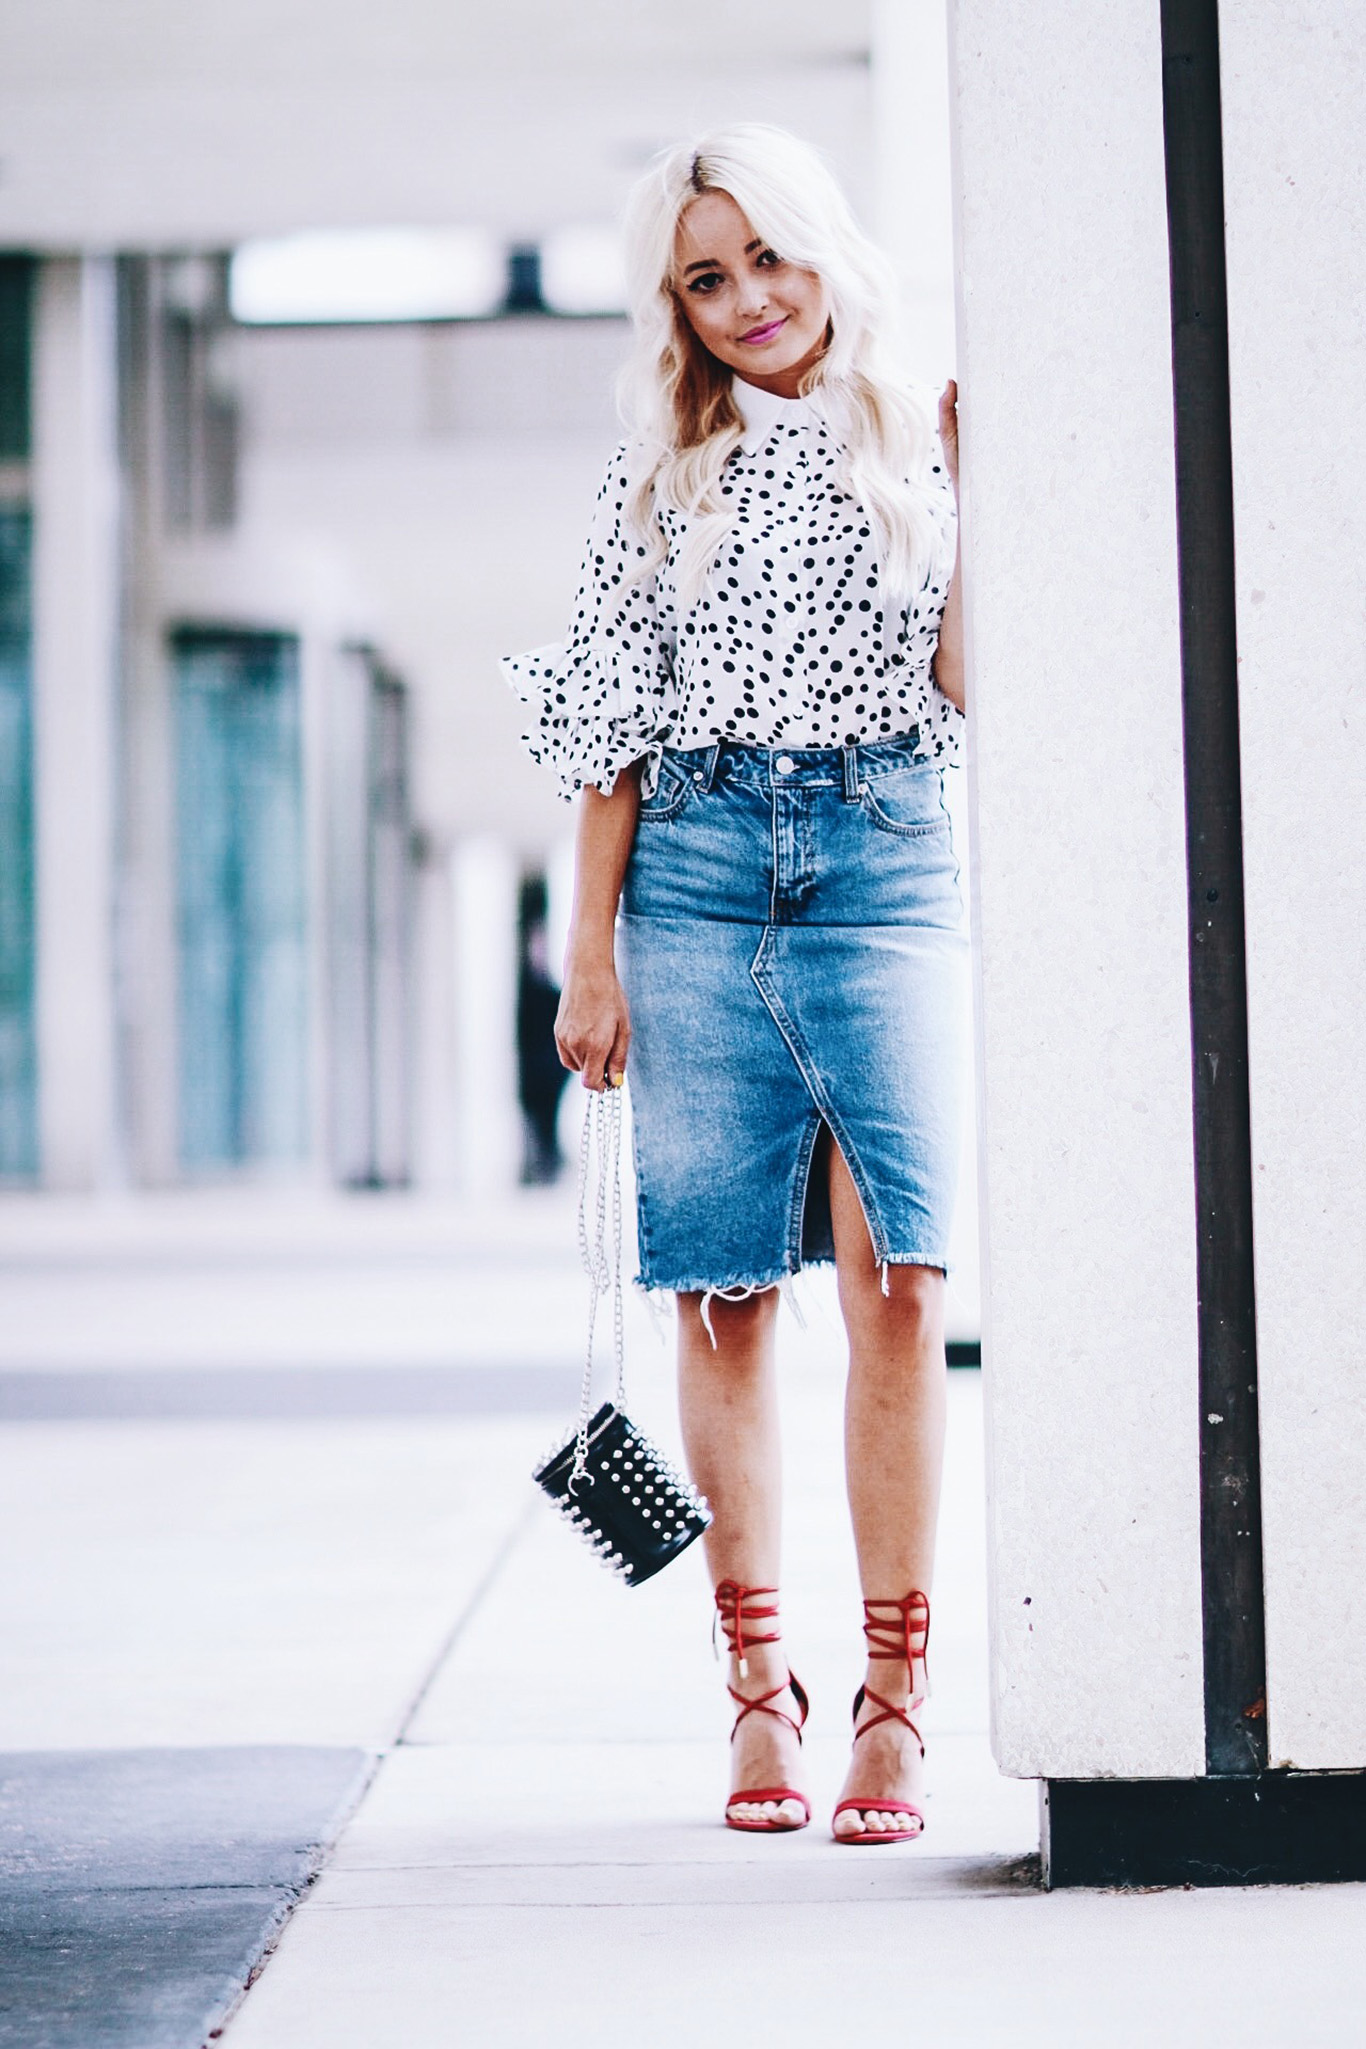 Alena Gidenko of modaprints.com styles a denim pencil skirt with a polka dot blouse